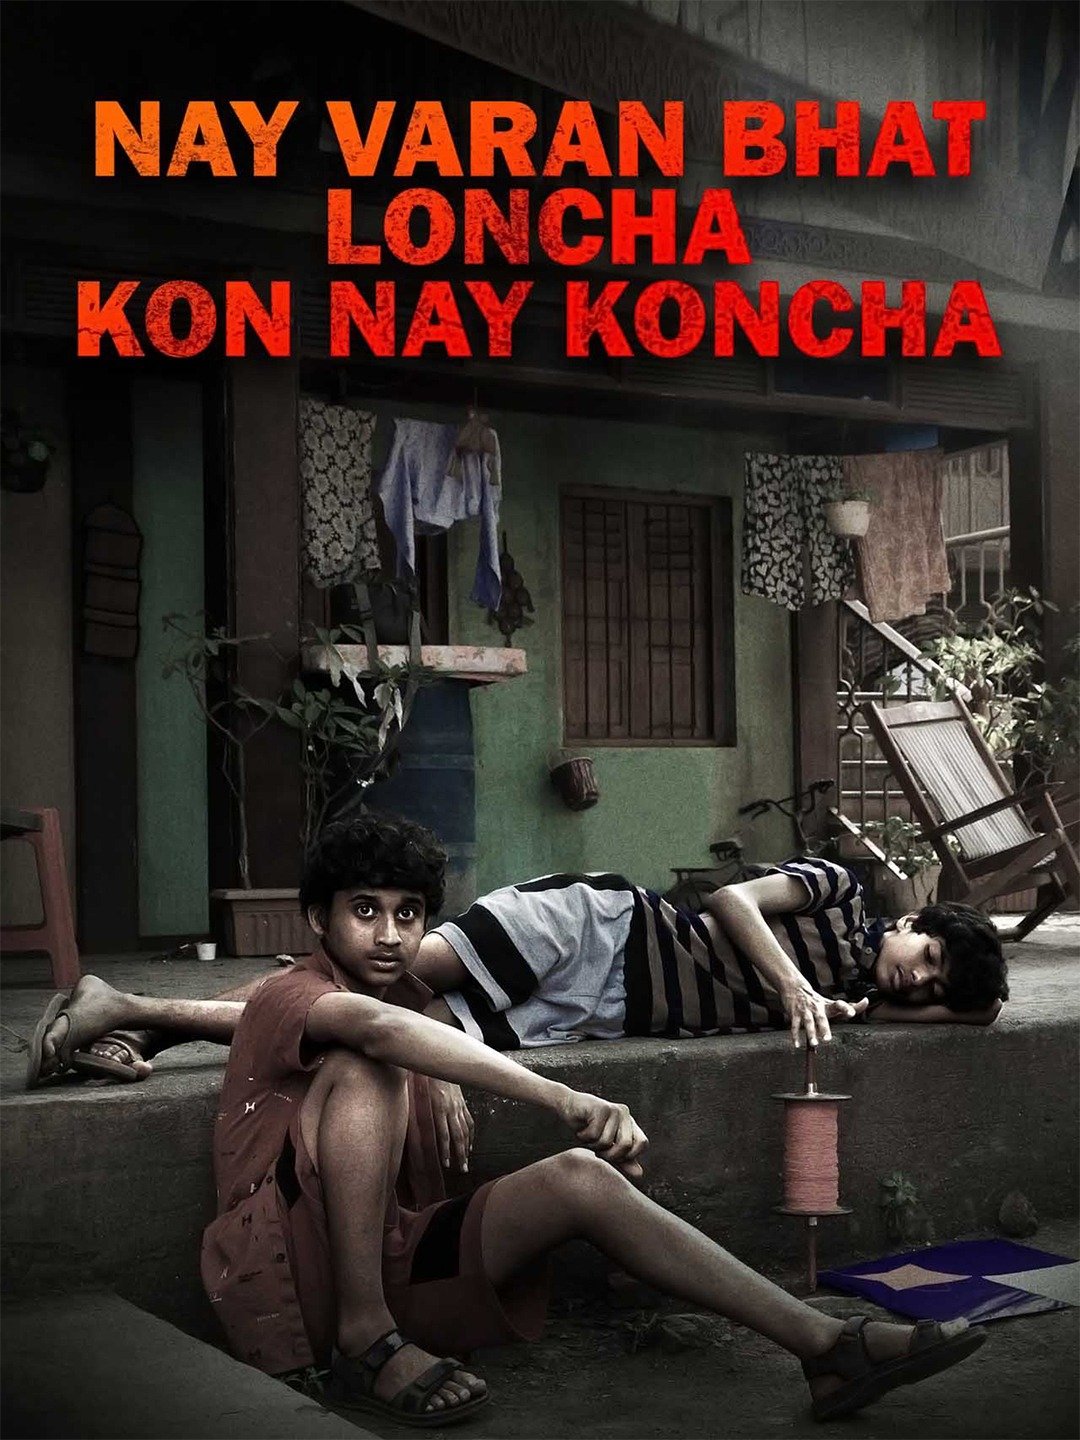 Nay varan bhat loncha movie